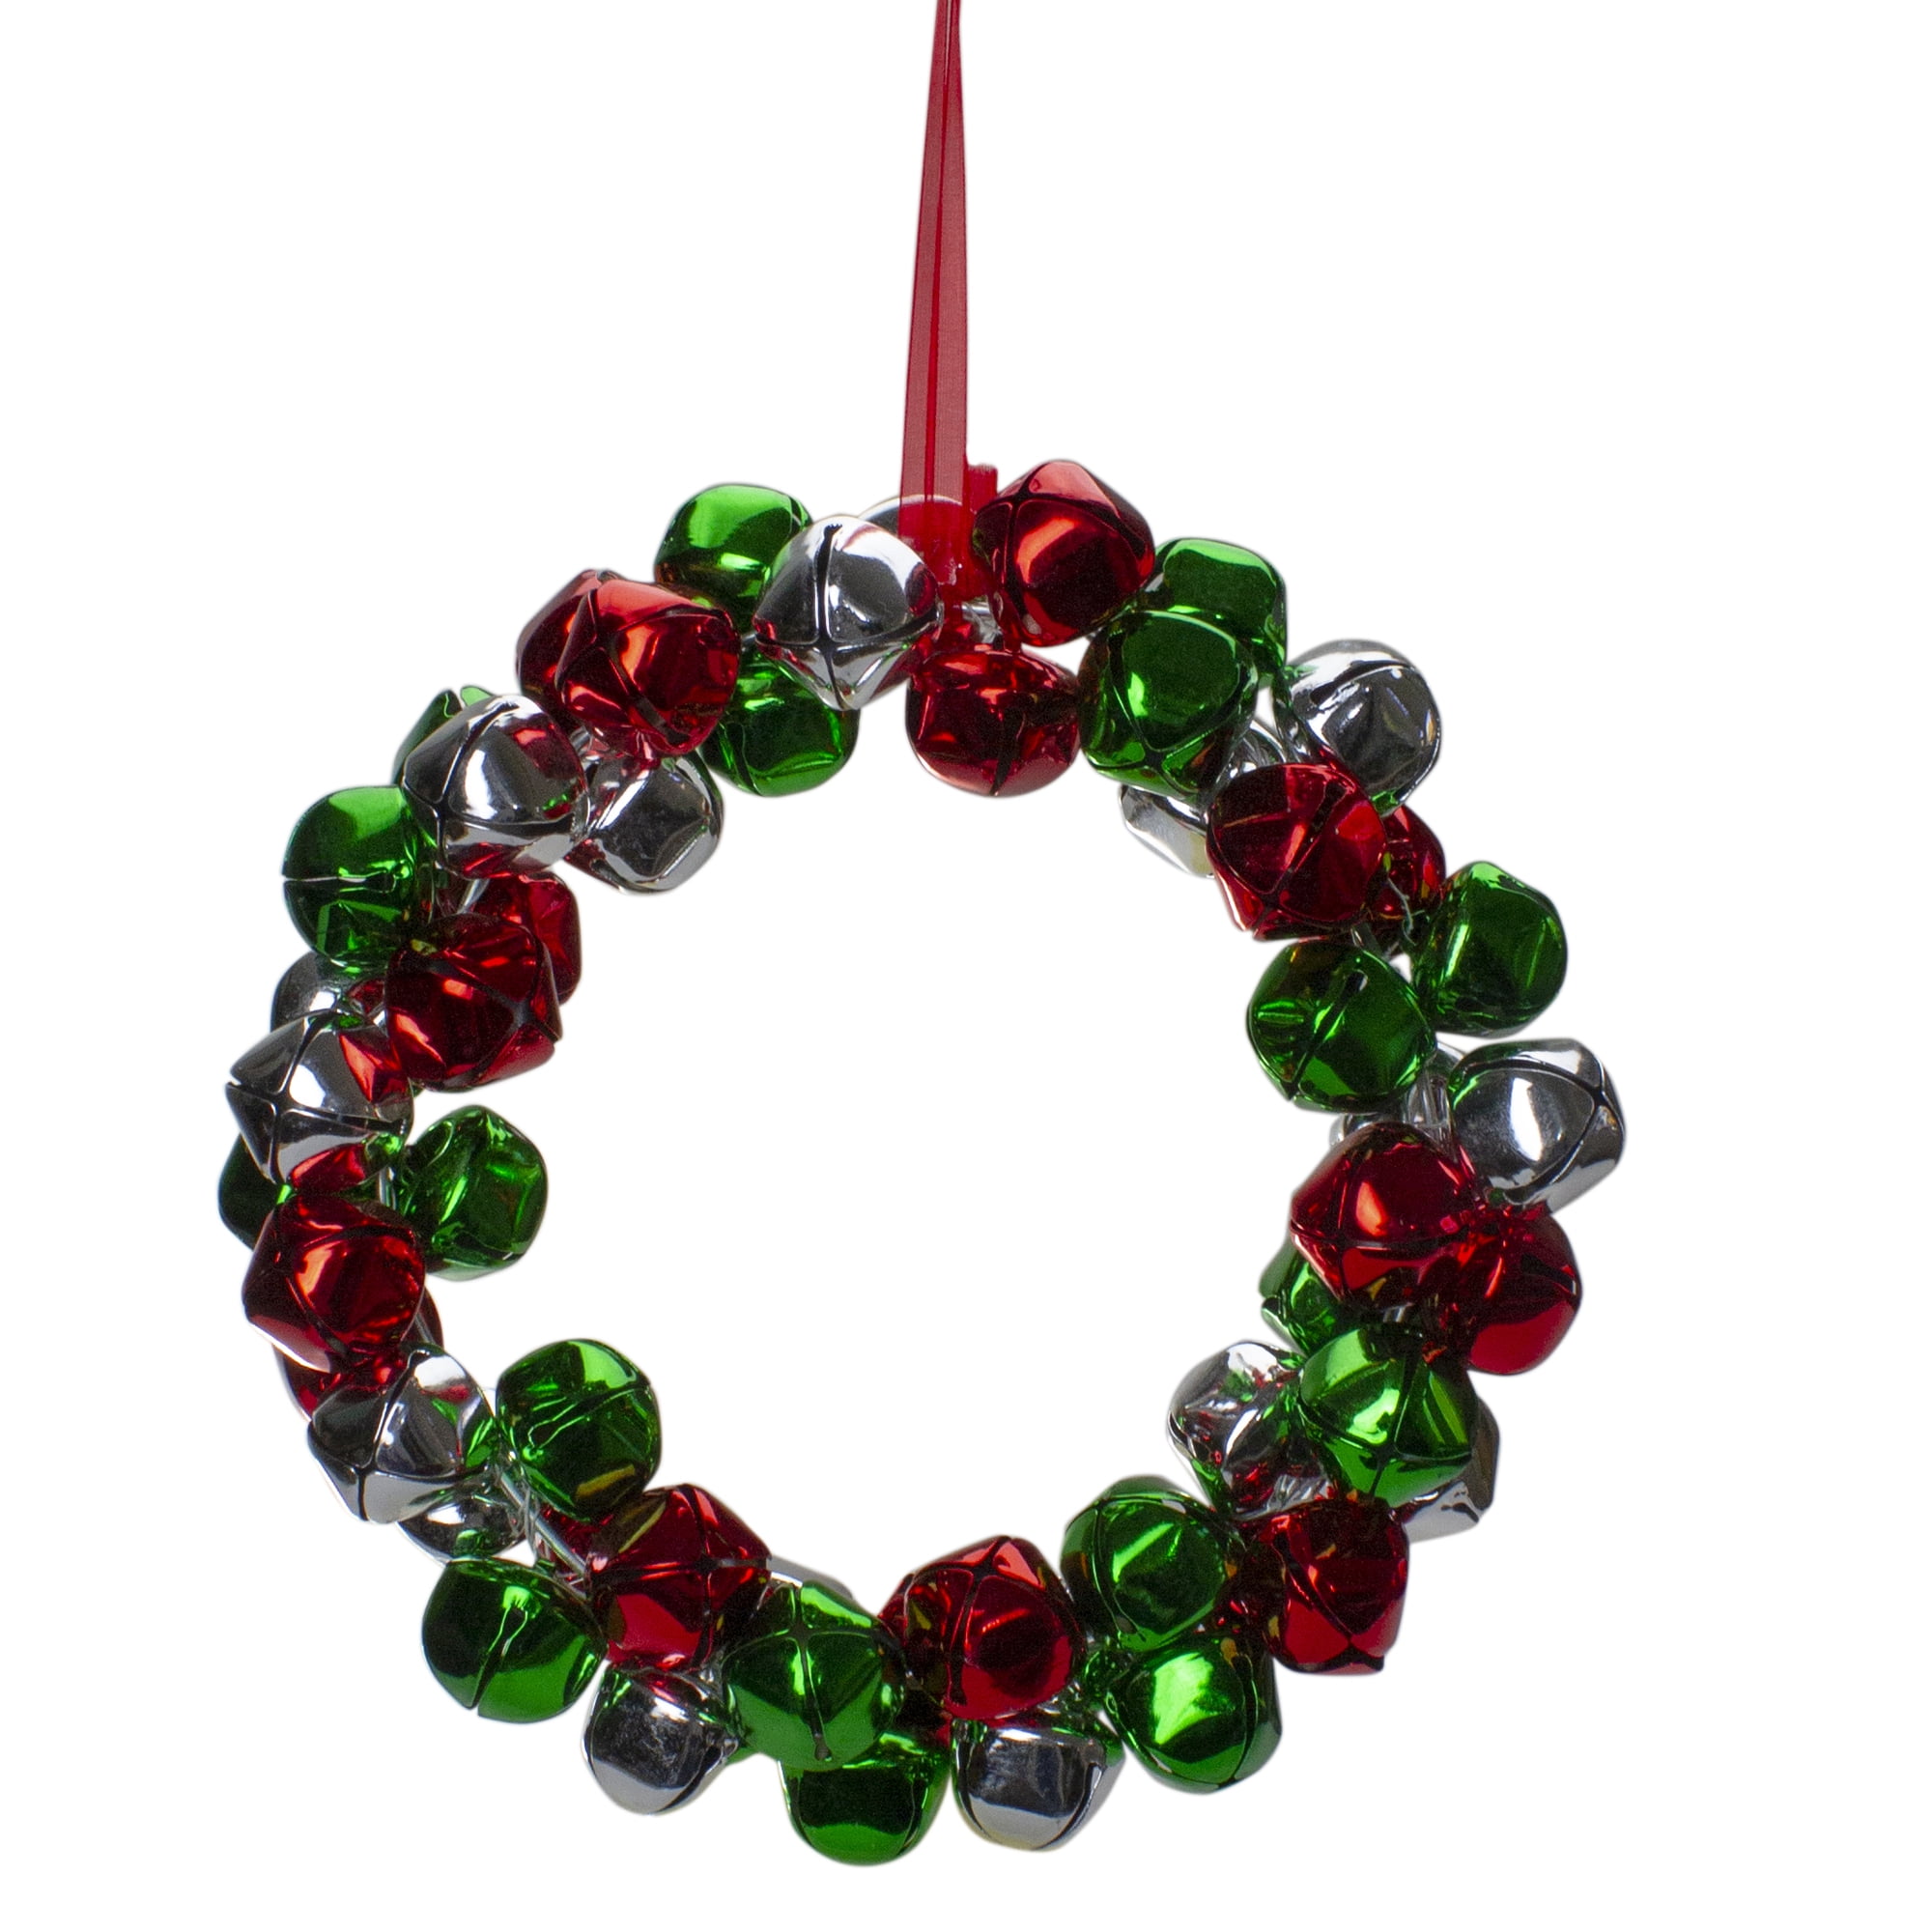 New 9 counts Christmas Jingle Bells Ornaments Decorative Metal Green Gold Red